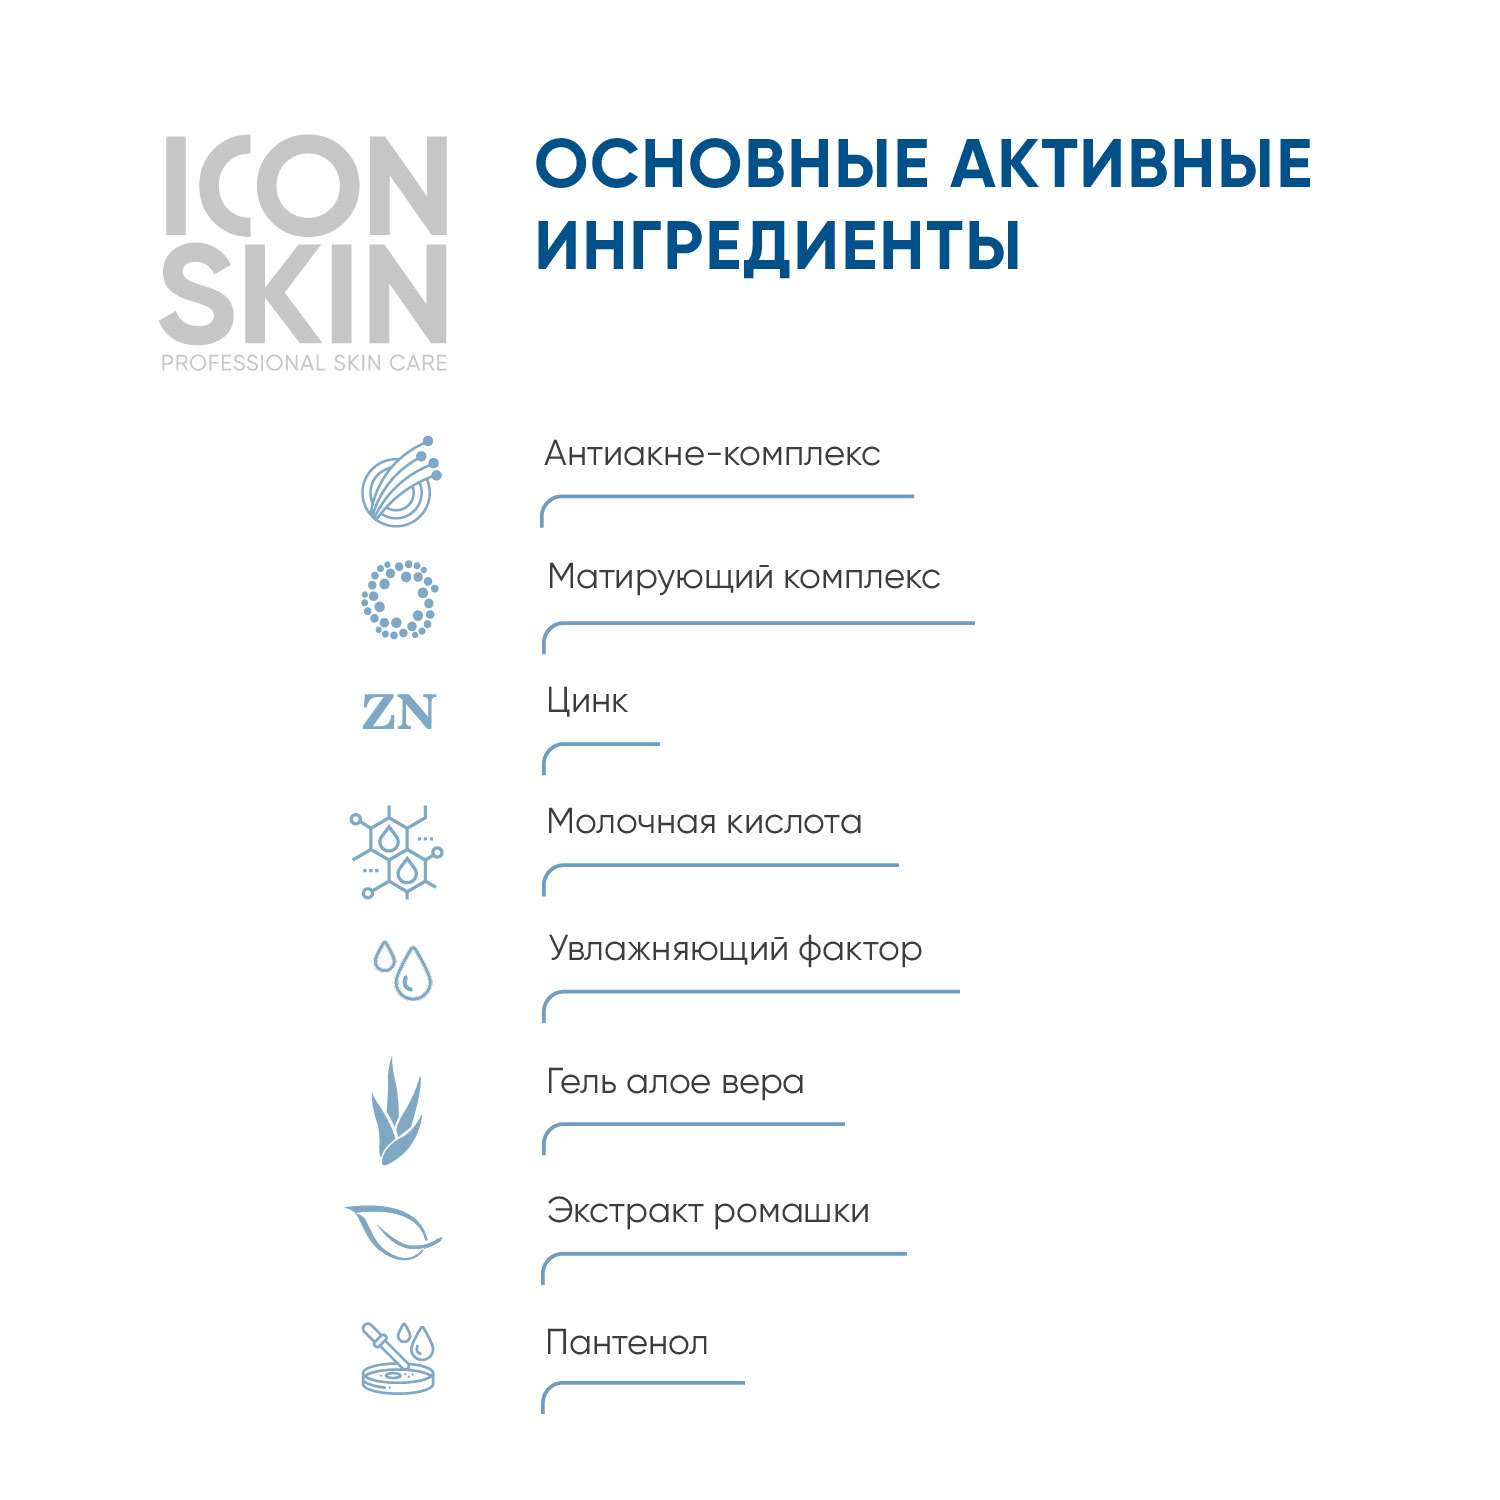 Тоник ICON SKIN очищающий активатор ultra skin 150 мл - фото 3